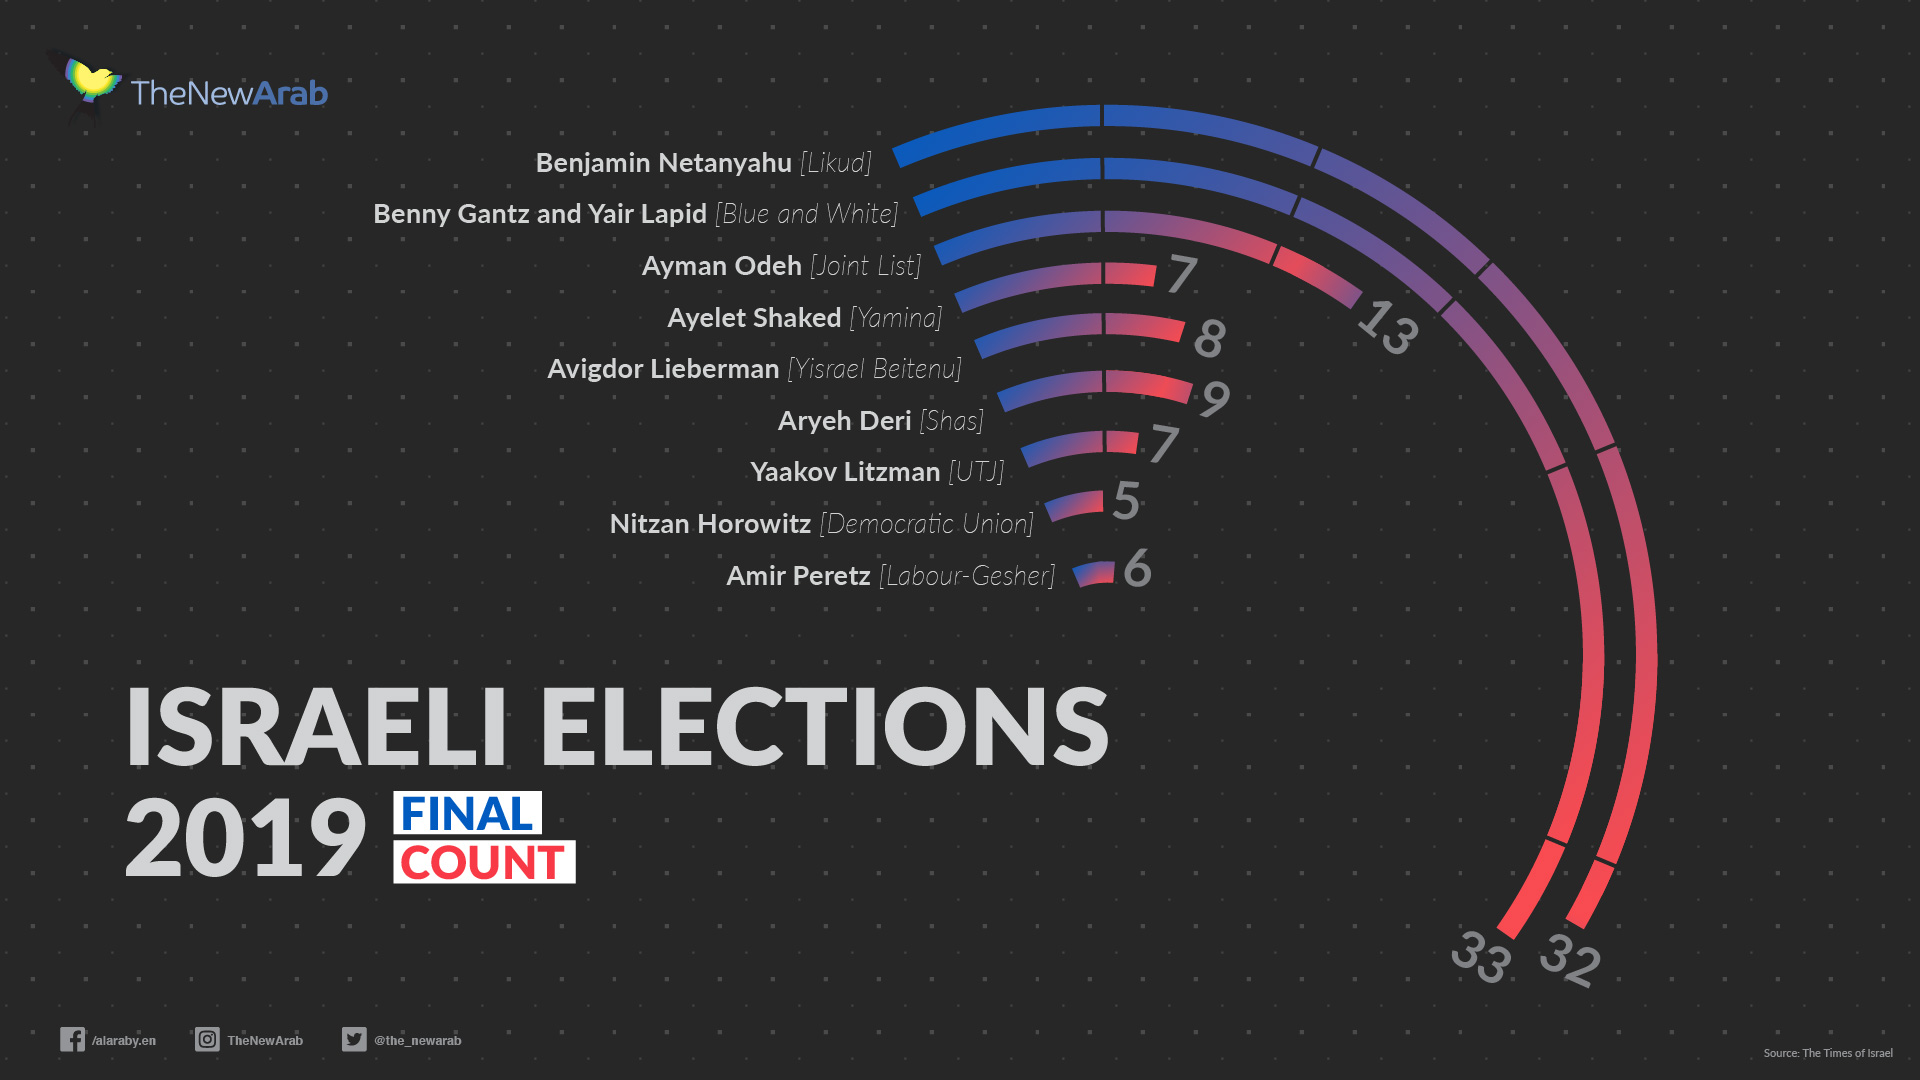 Israel - Israeli elections 2019 final count_1920x1080.jpg